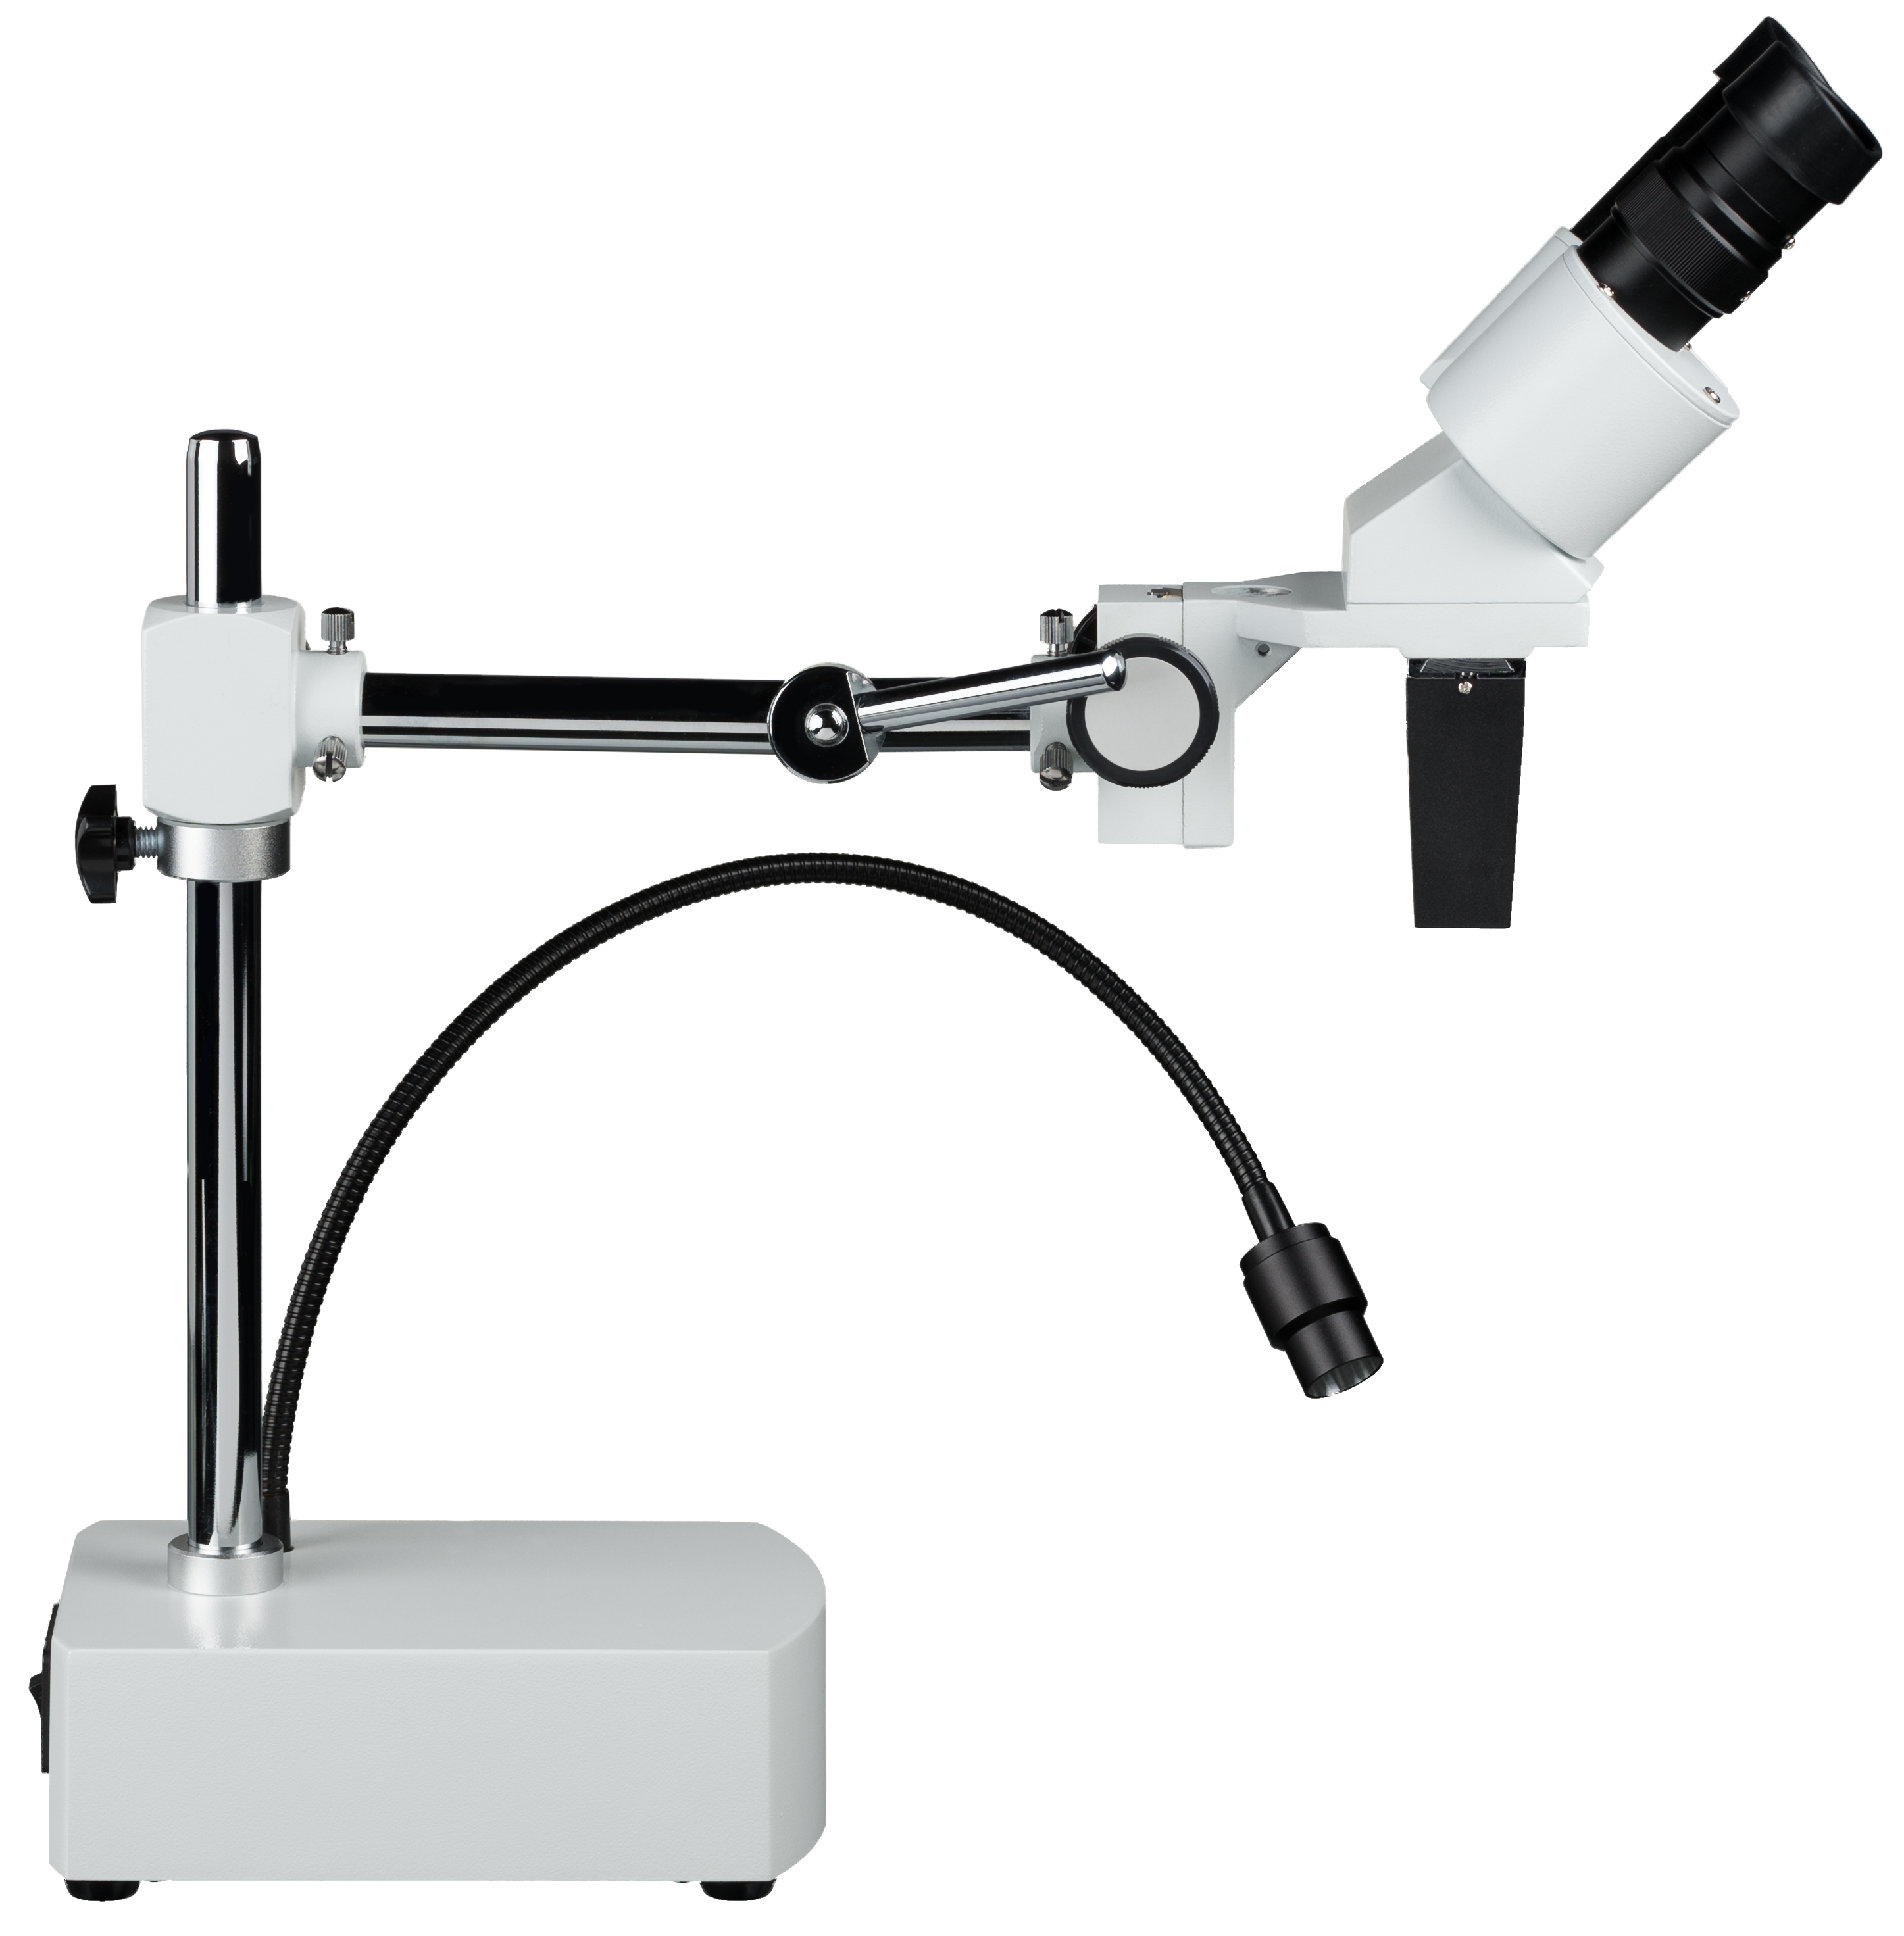 BRESSER Biorit ICD CS Stereomikroskop LED